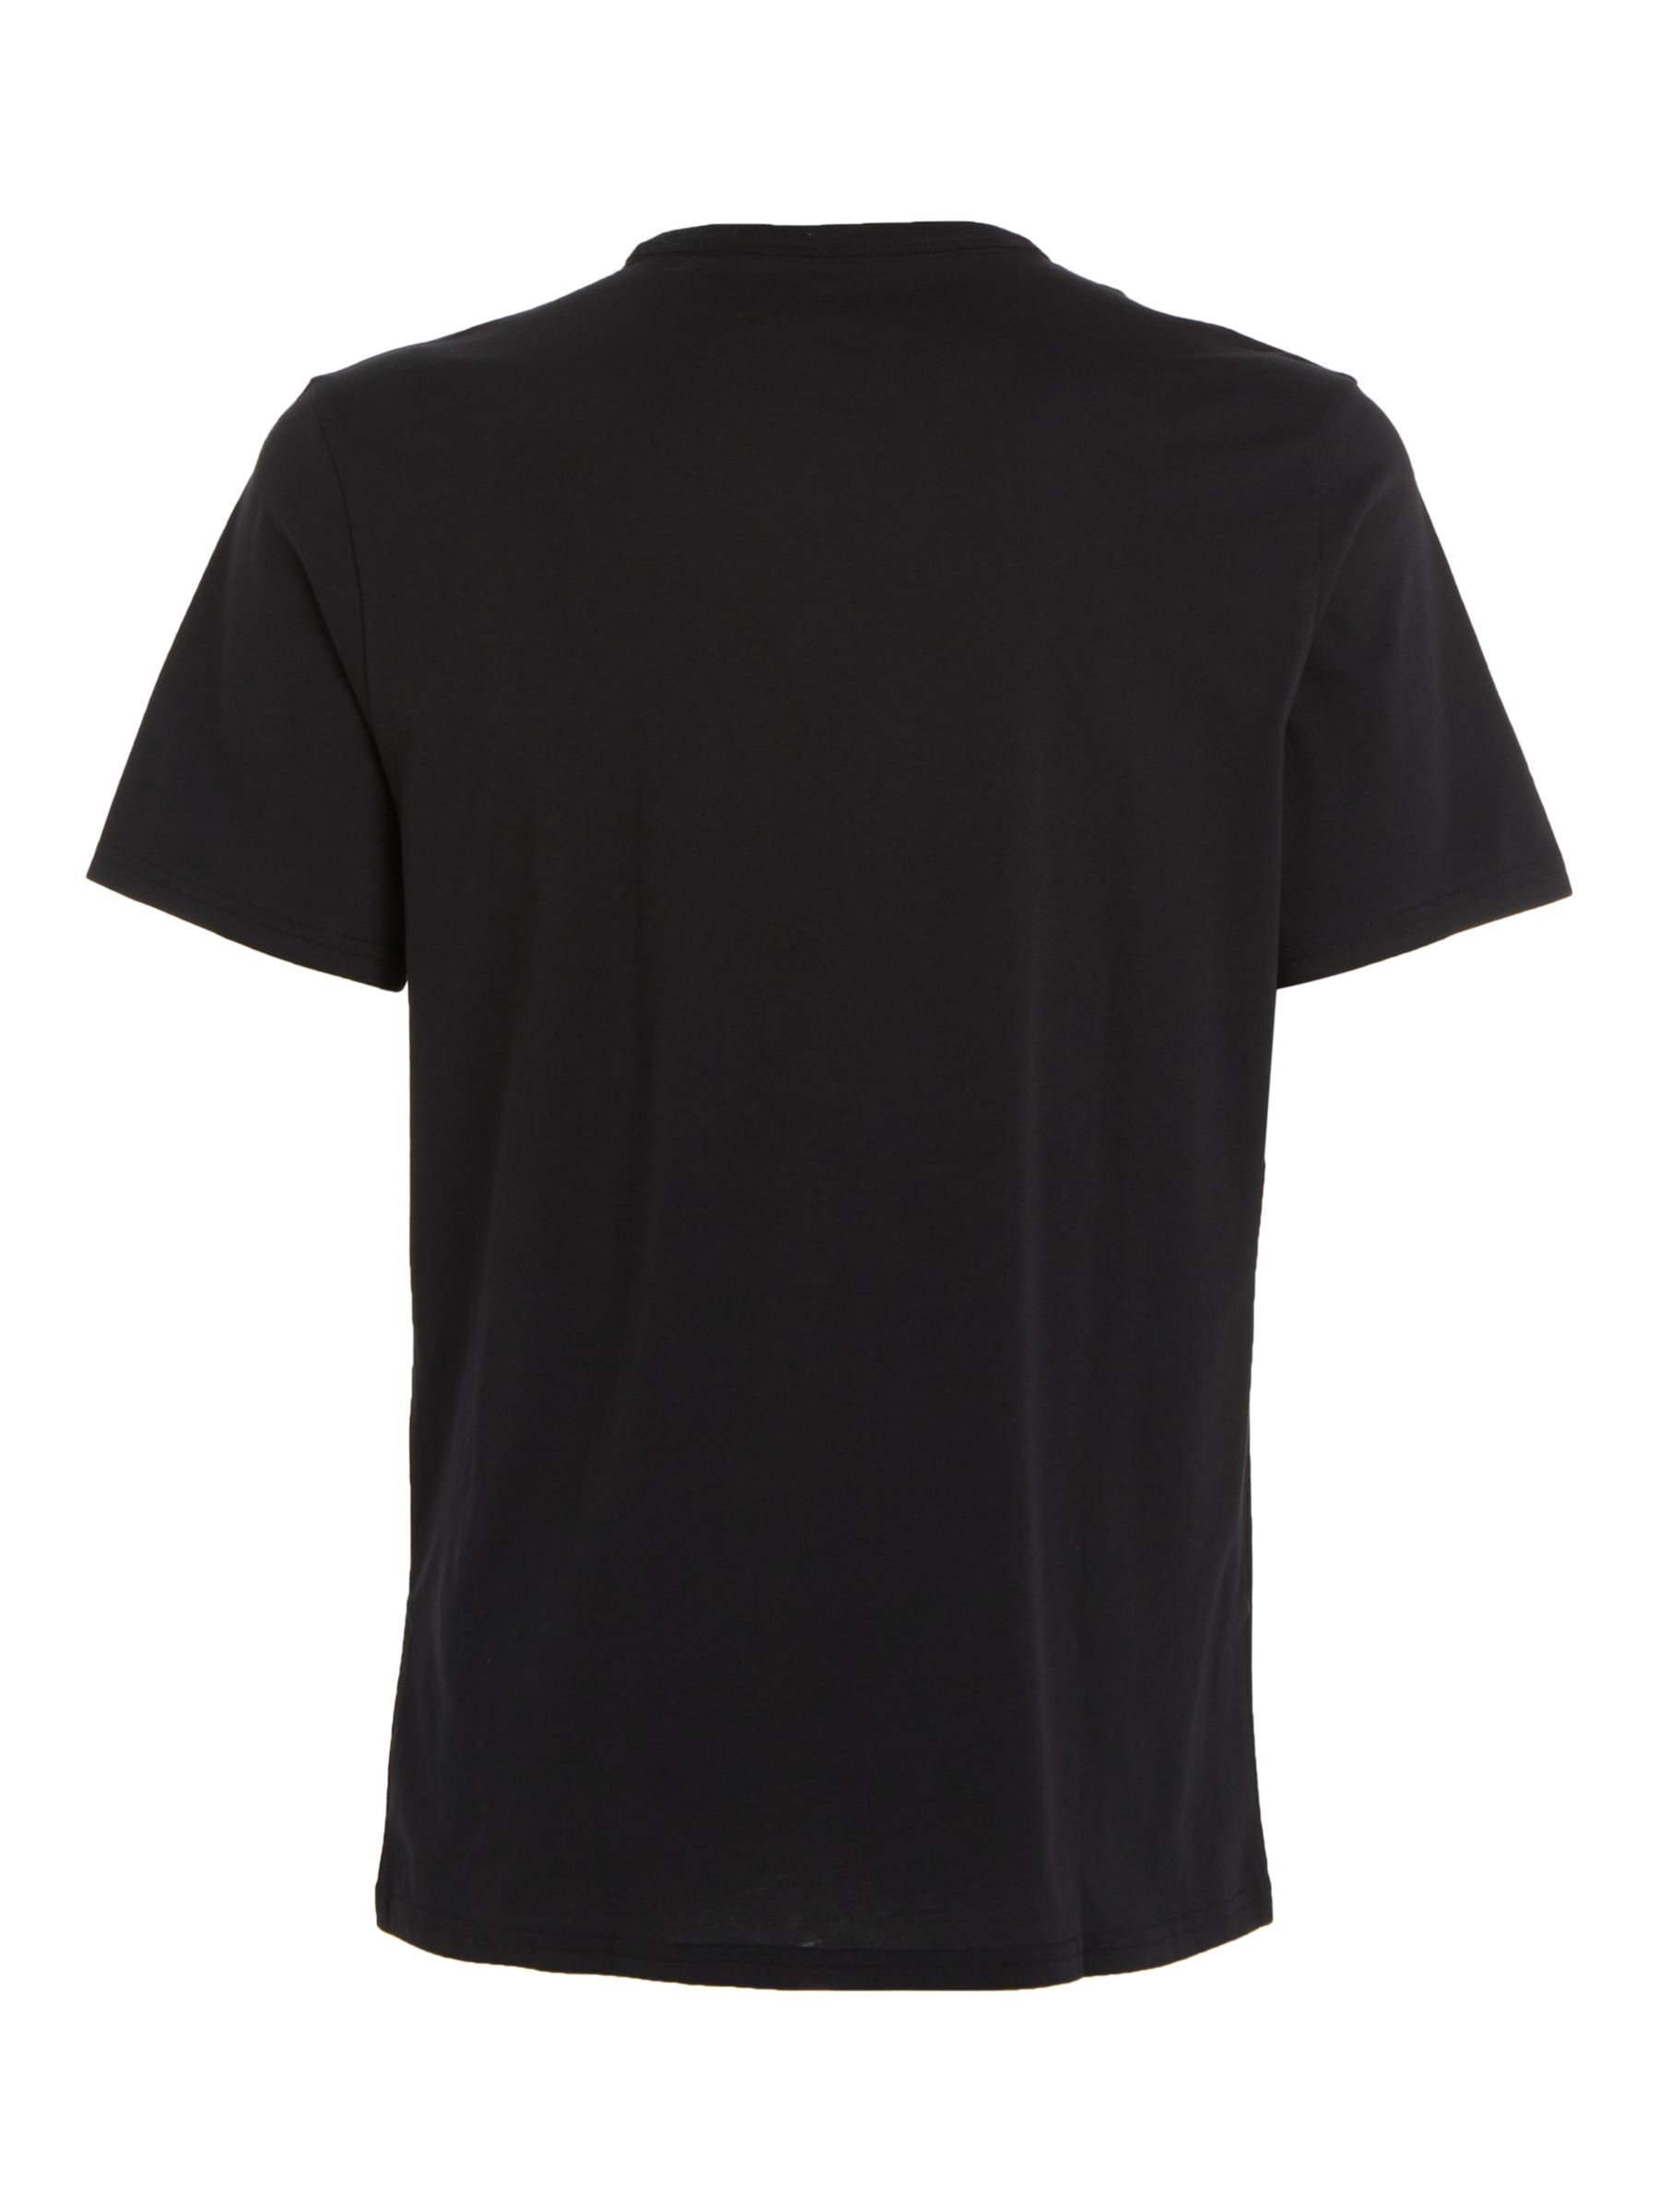 Calvin Klein Intense Power Lounge T-Shirt, Black/Tropic Lime, S